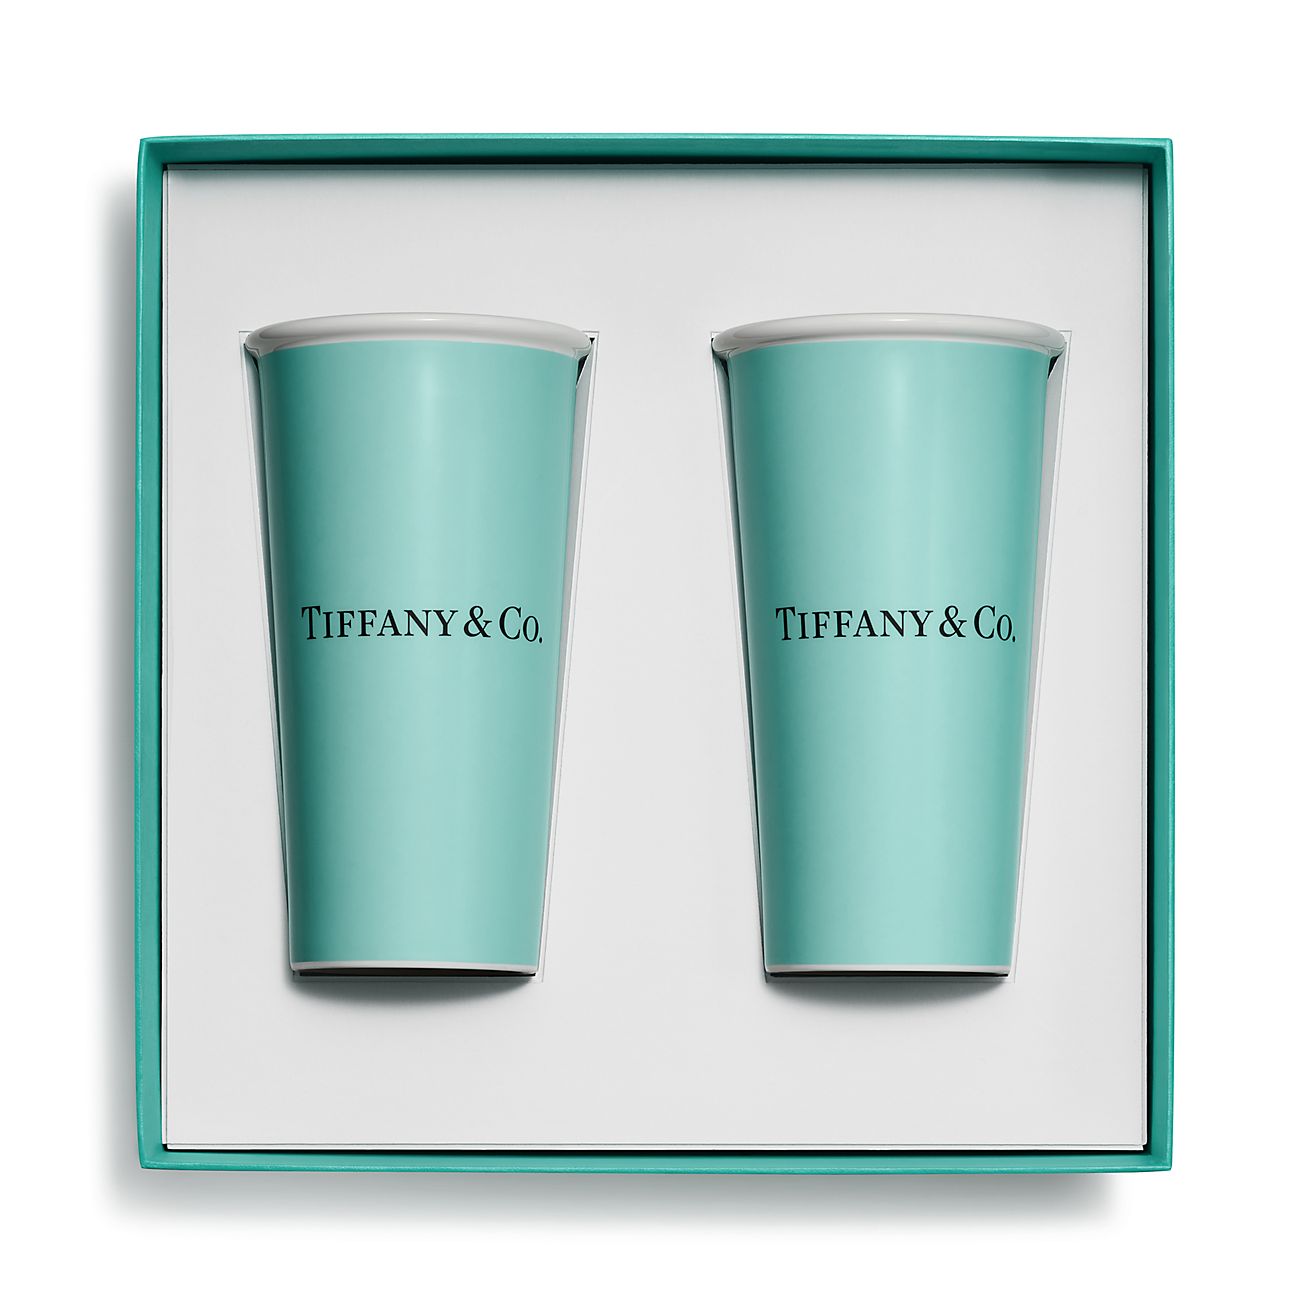 https://media.tiffany.com/is/image/Tiffany/EcomItemL2/everyday-objectstiffany-large-coffee-cups-73506875_1058222_AV_2.jpg?&op_usm=1.0,1.0,6.0&defaultImage=NoImageAvailableInternal&